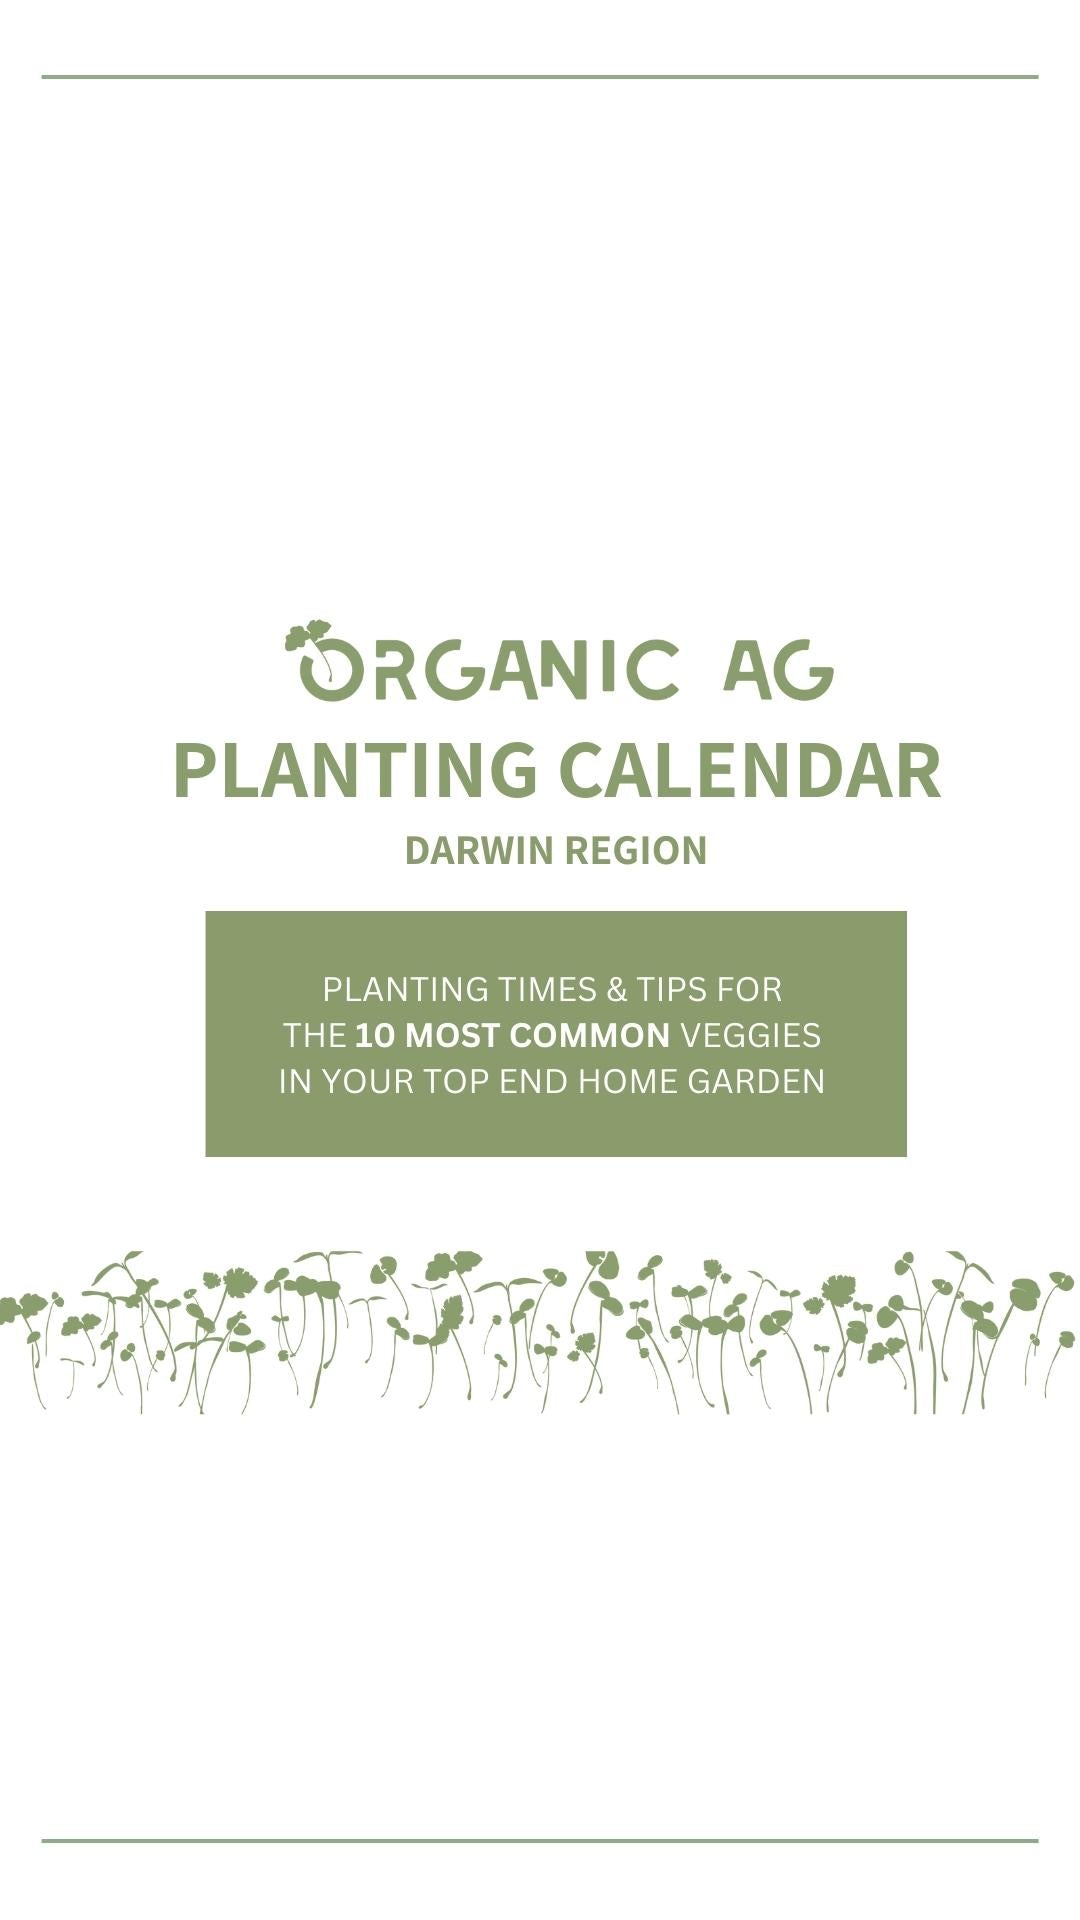 Organic AG Planting Calendar